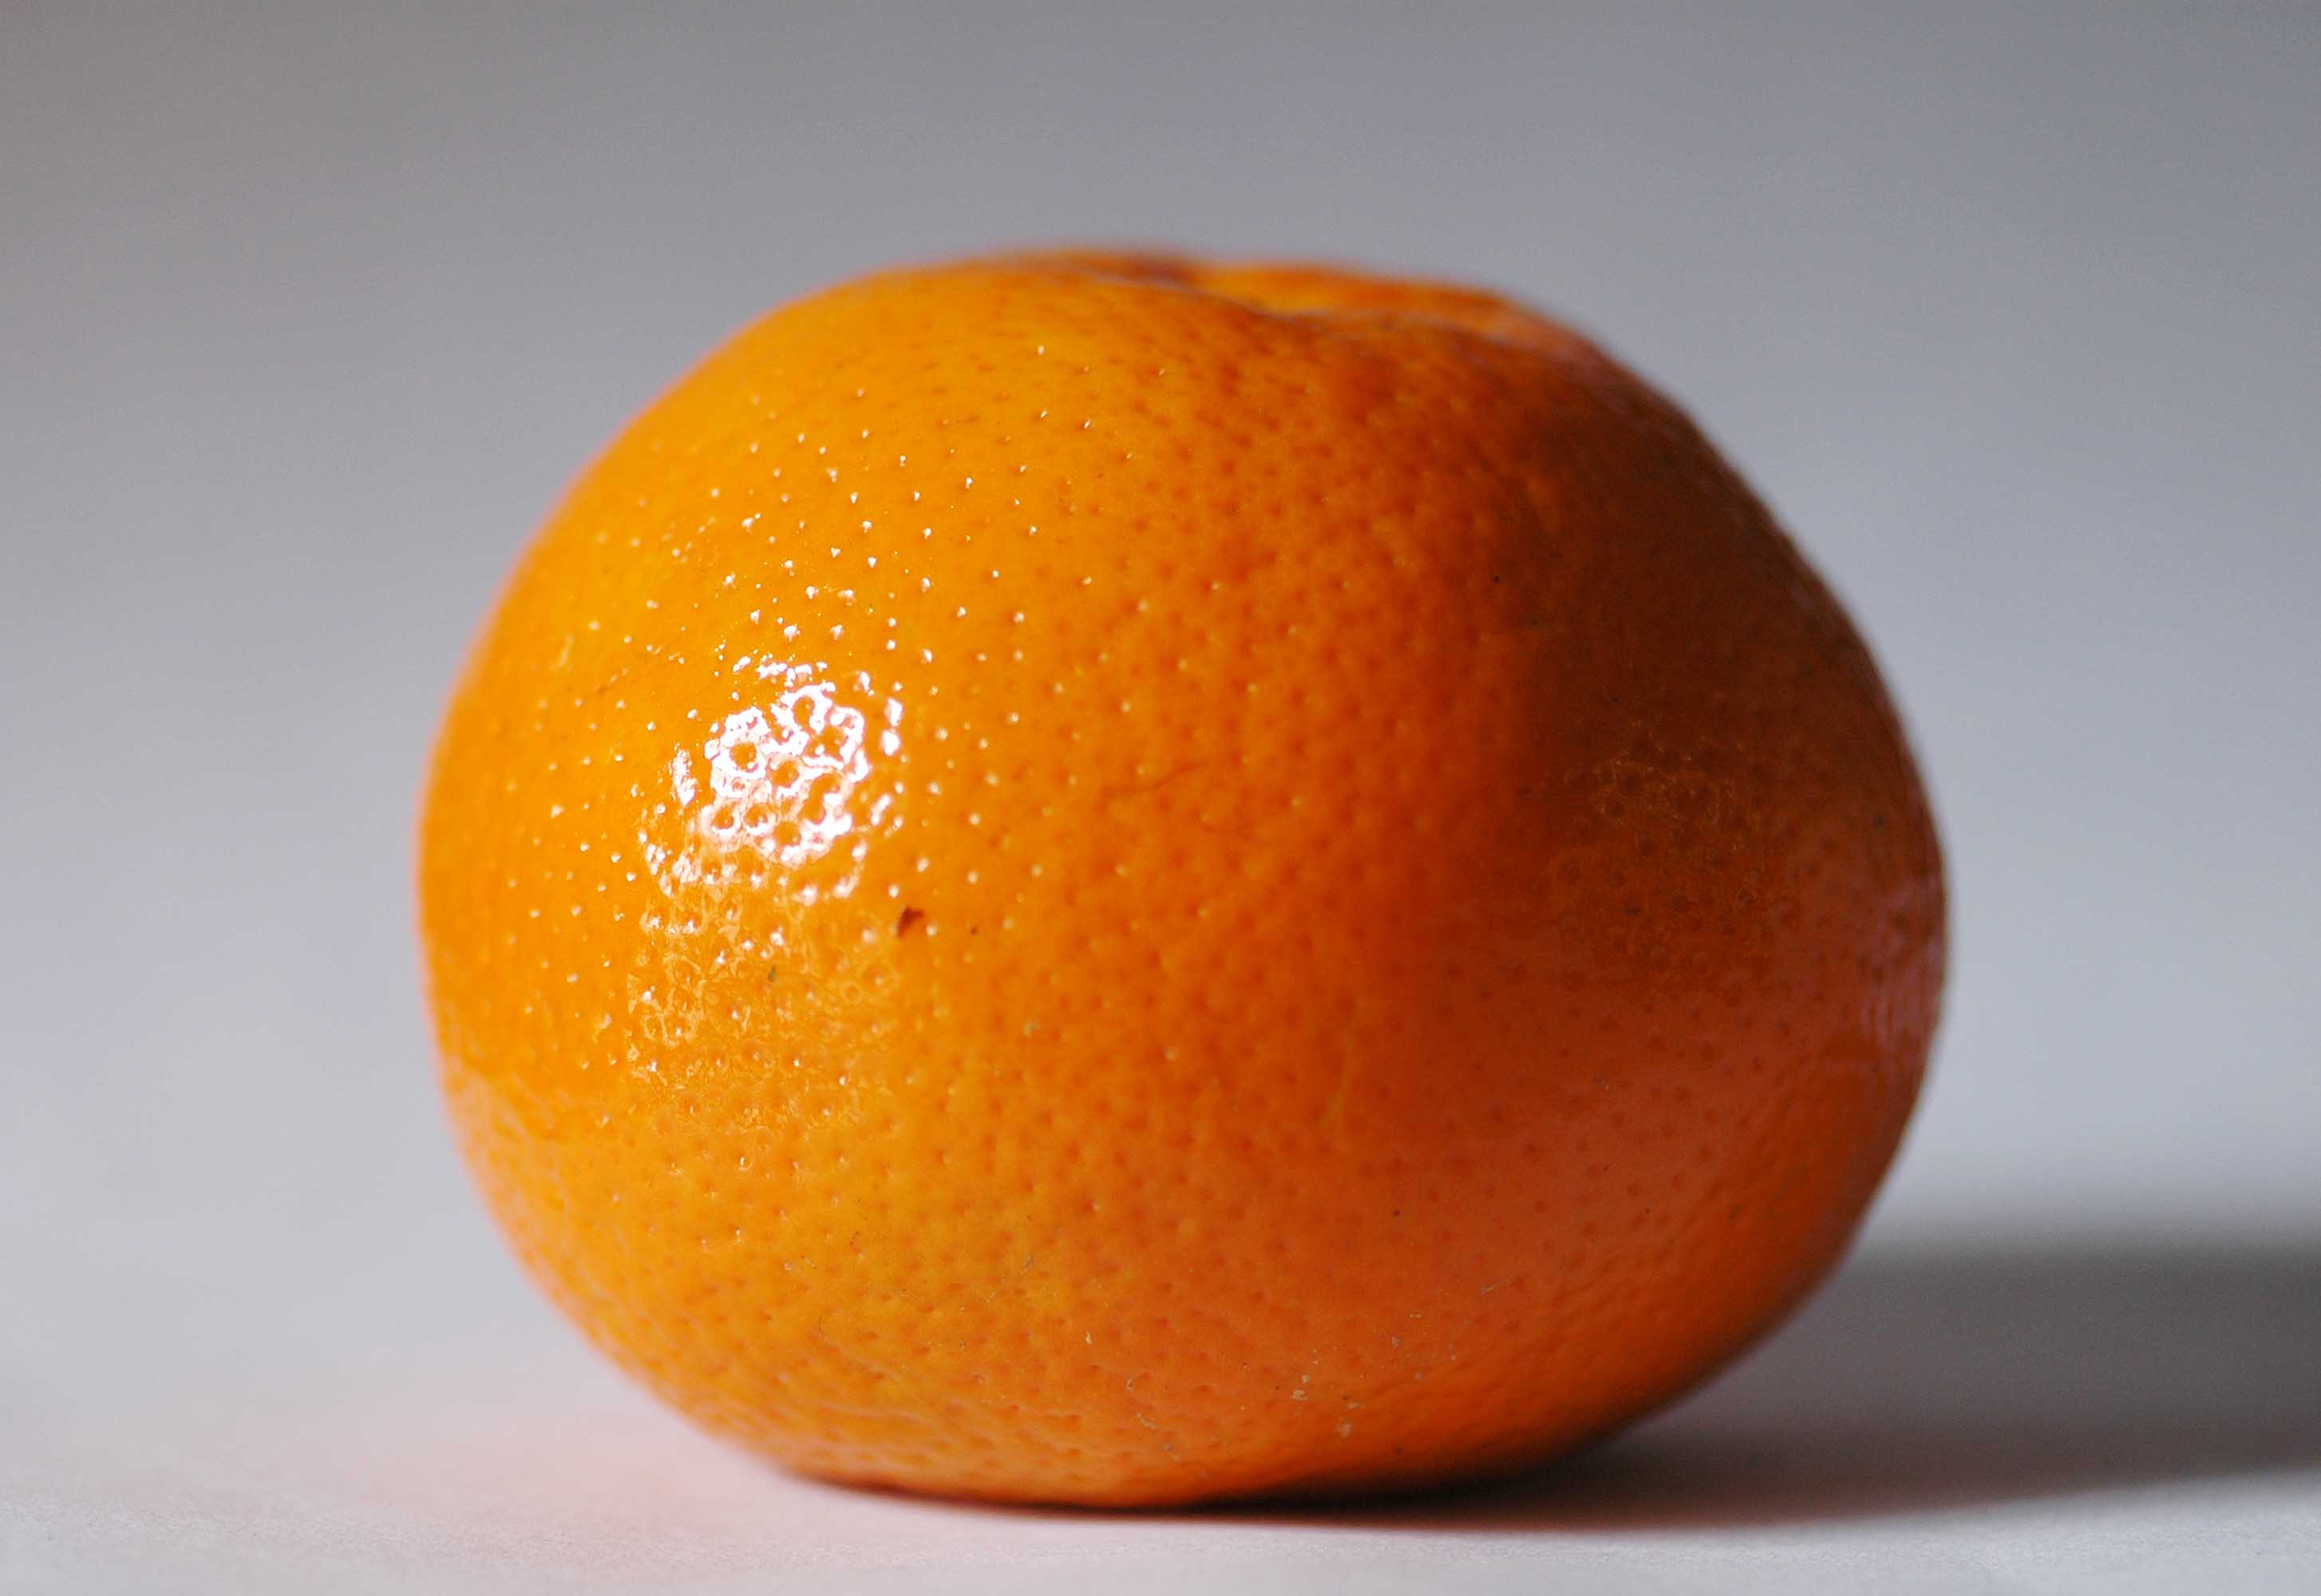 Kinnow (Kinoo) a hybrid citrus